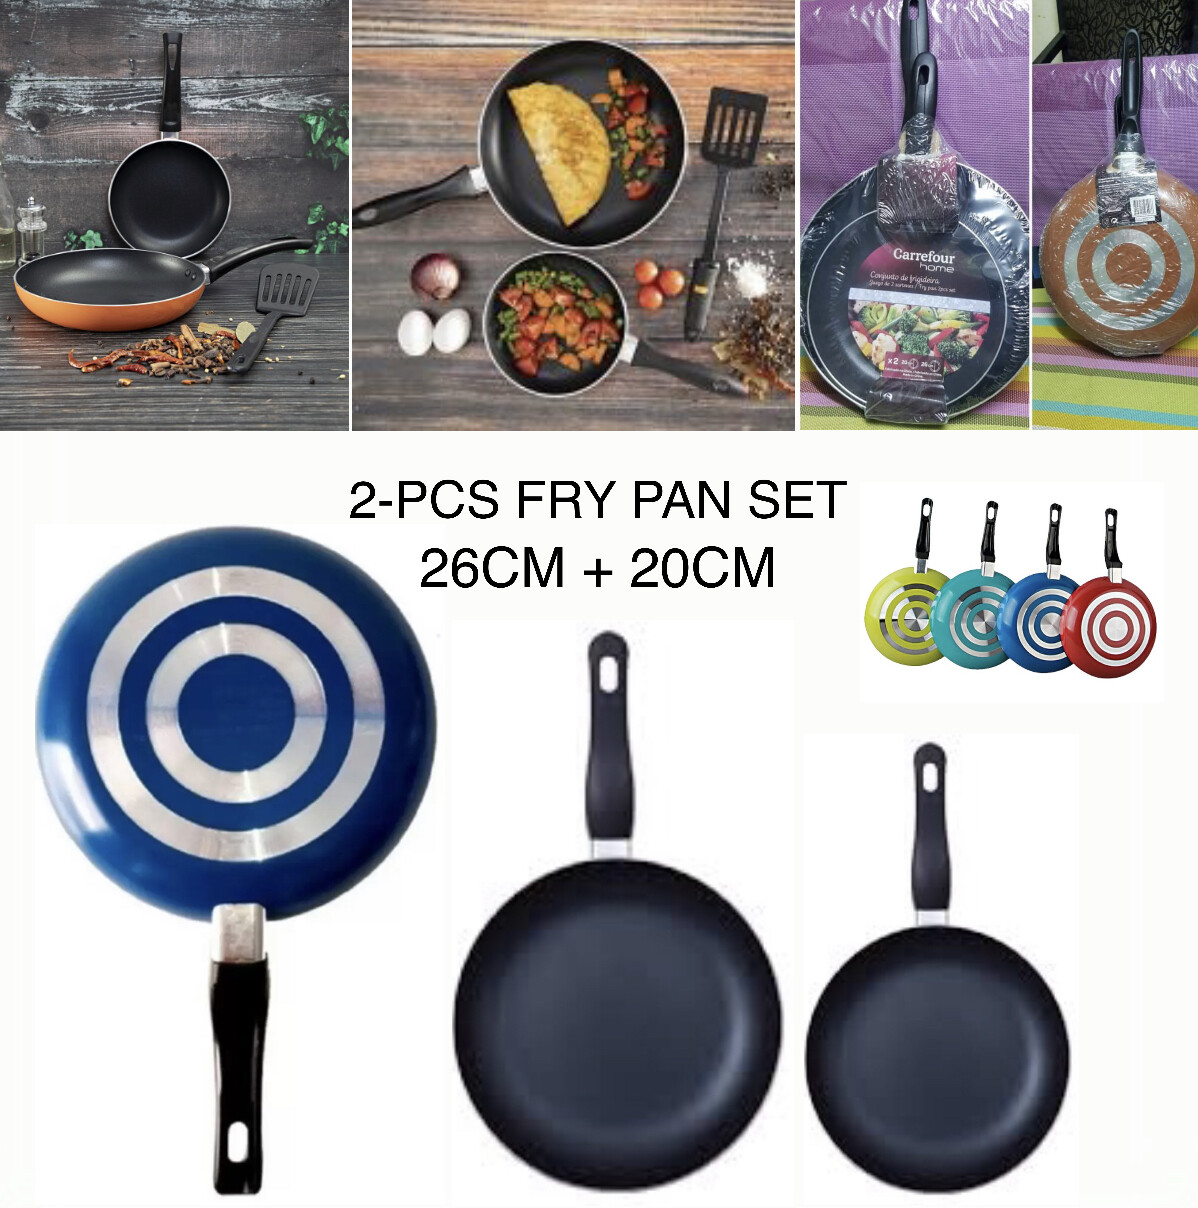 2-Pcs Fry Pan Set